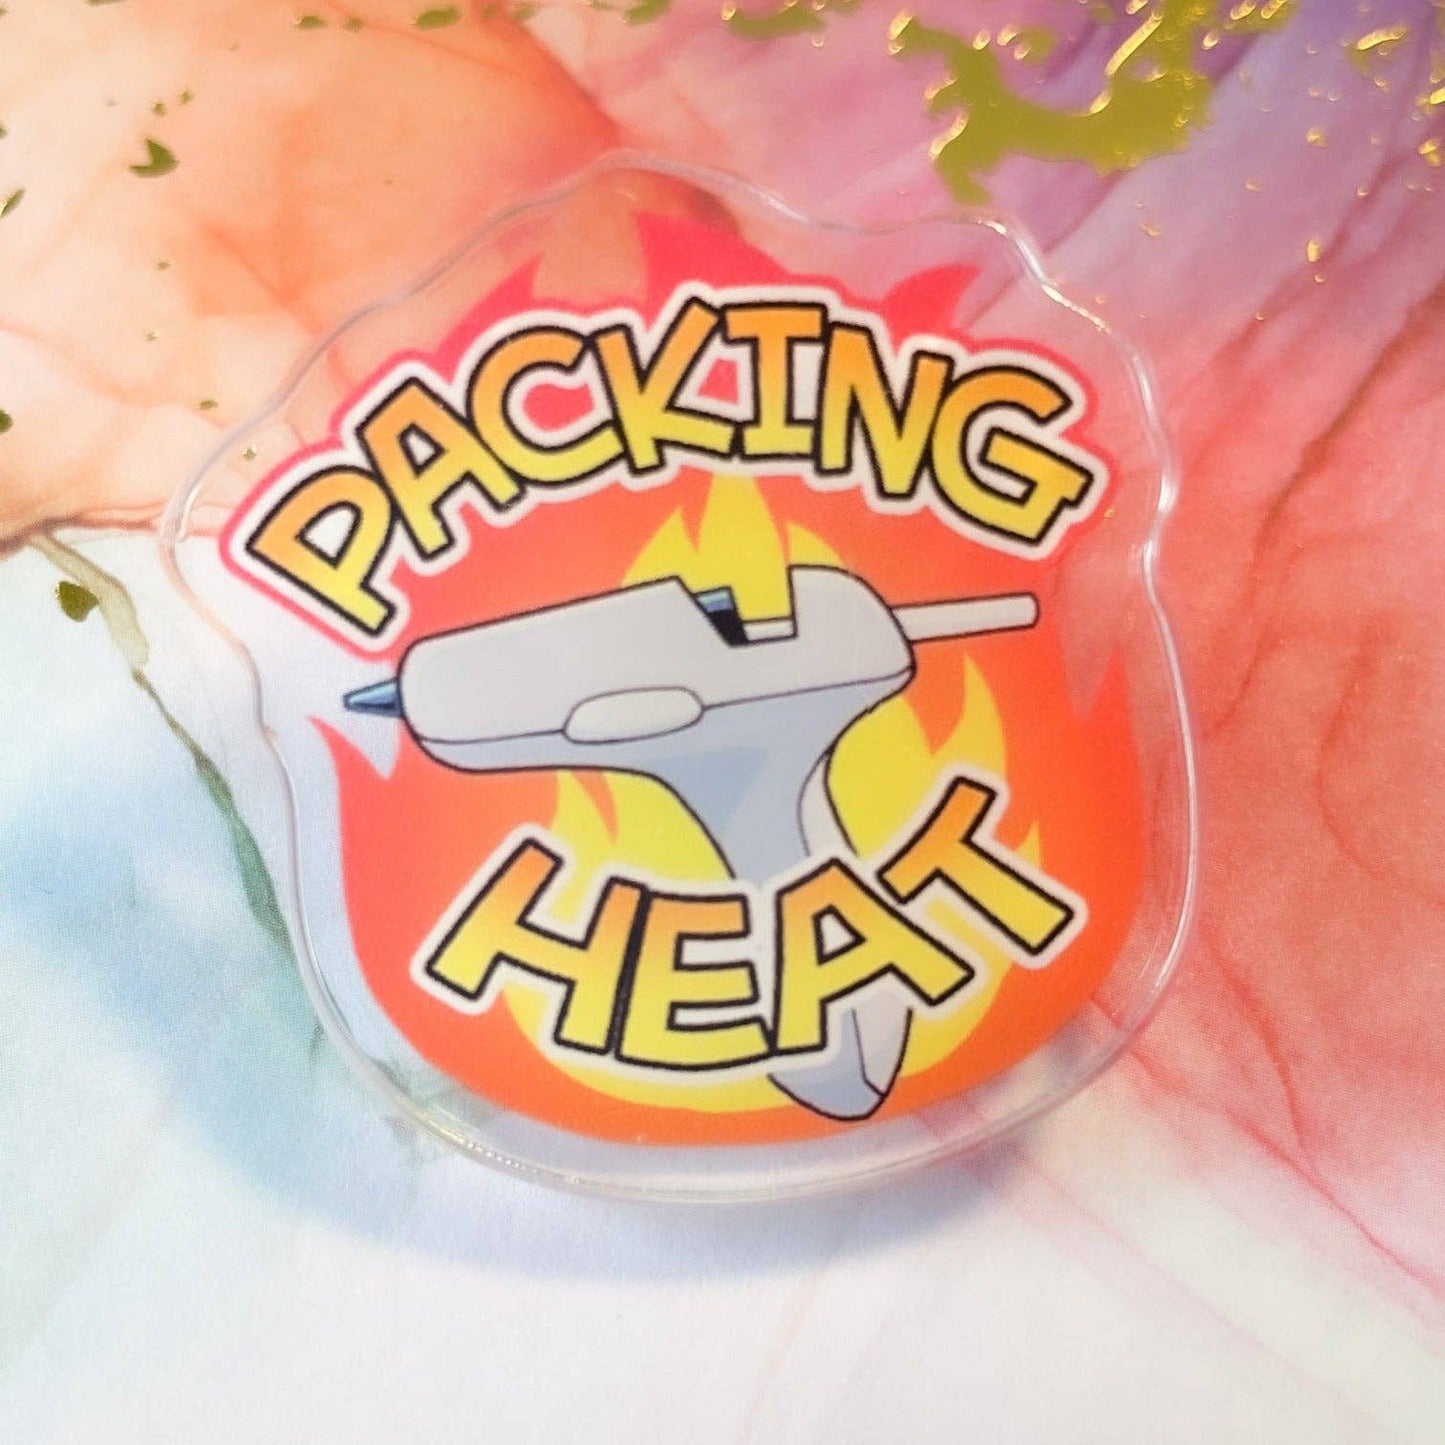 Packing Heat Acrylic Pin